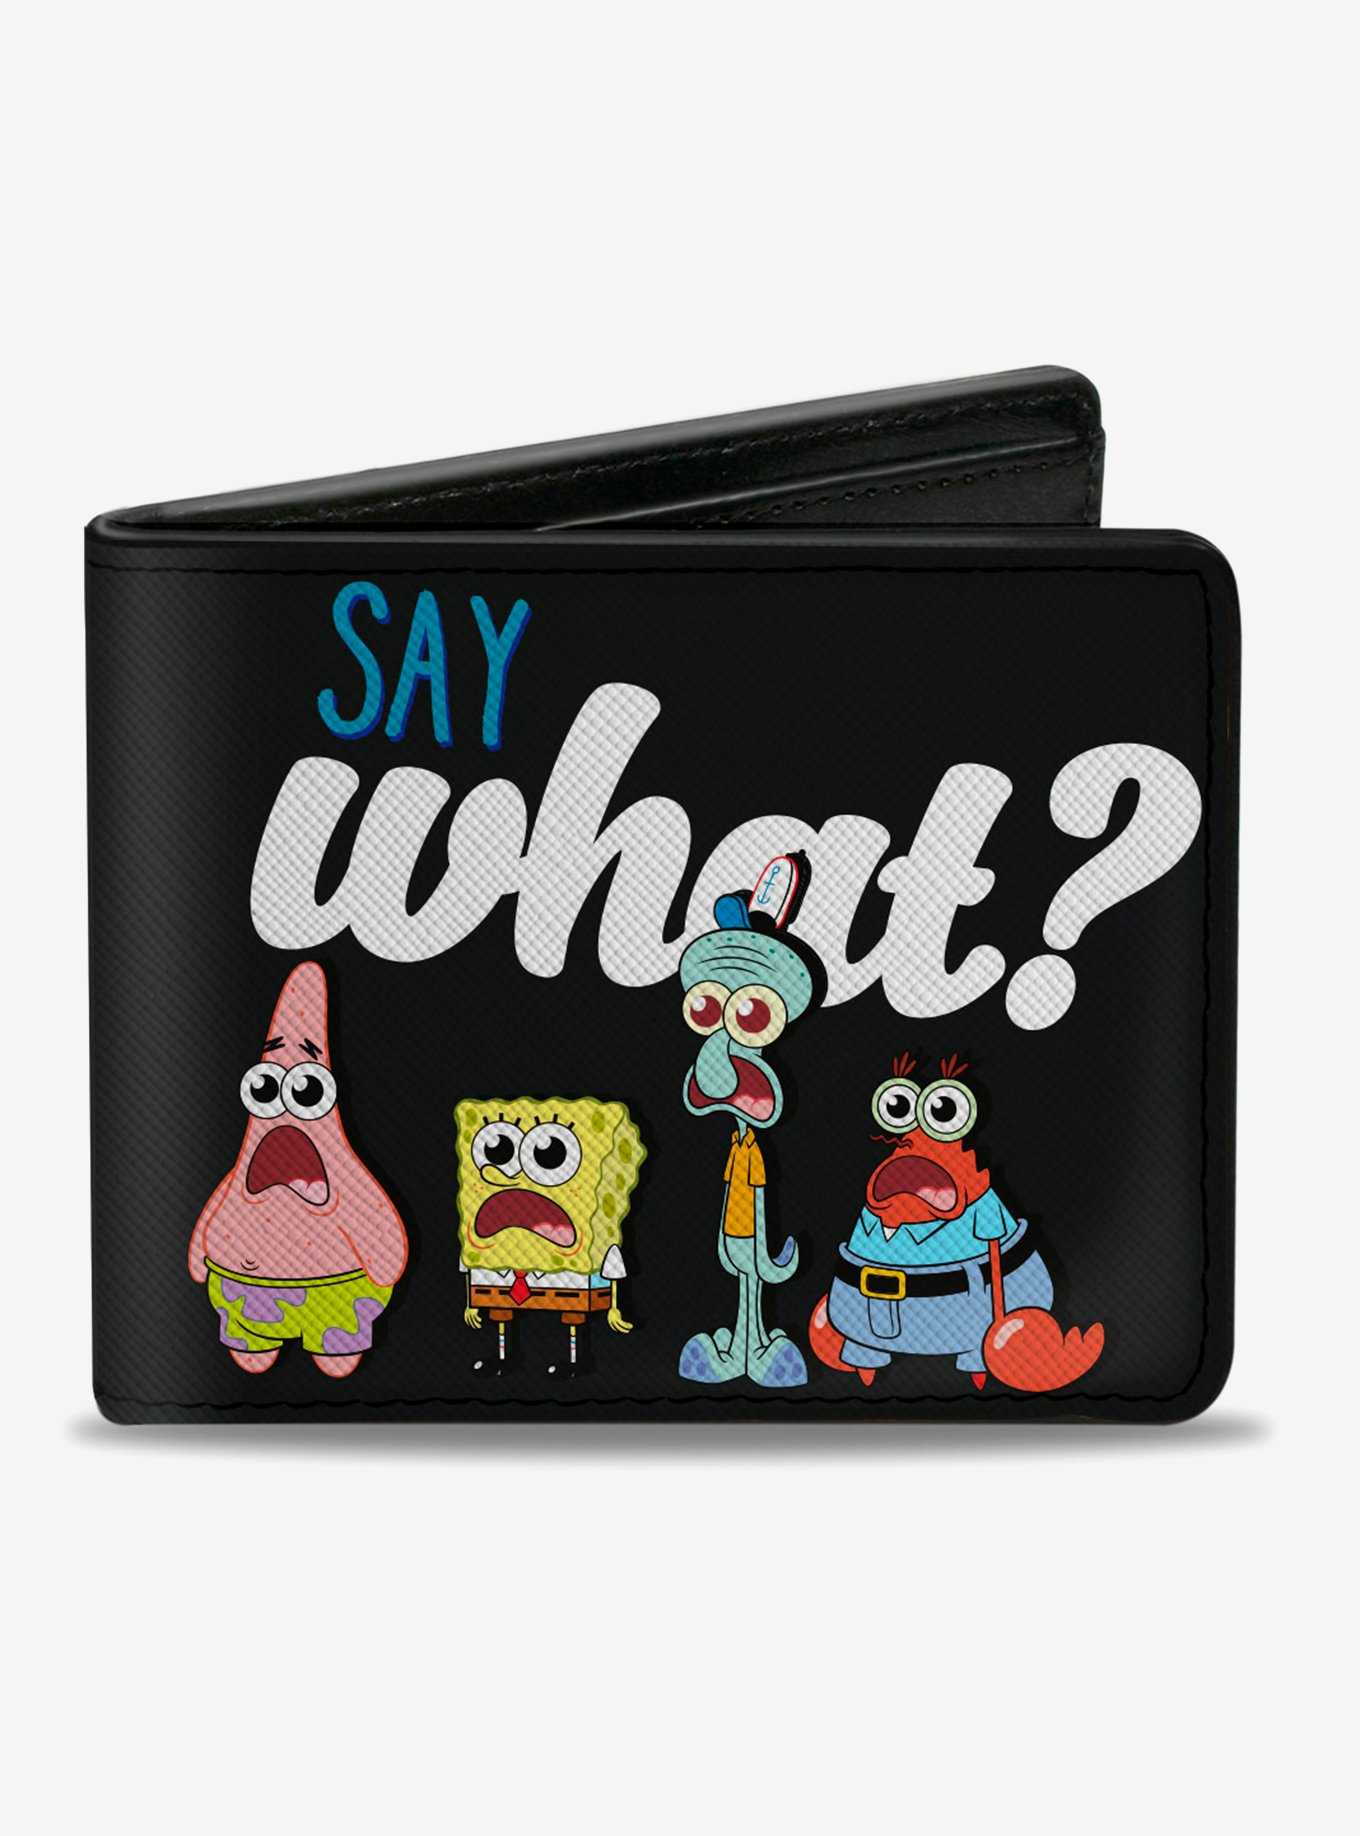 SpongeBob Squarepants and Friends Say What Bifold Wallet, , hi-res